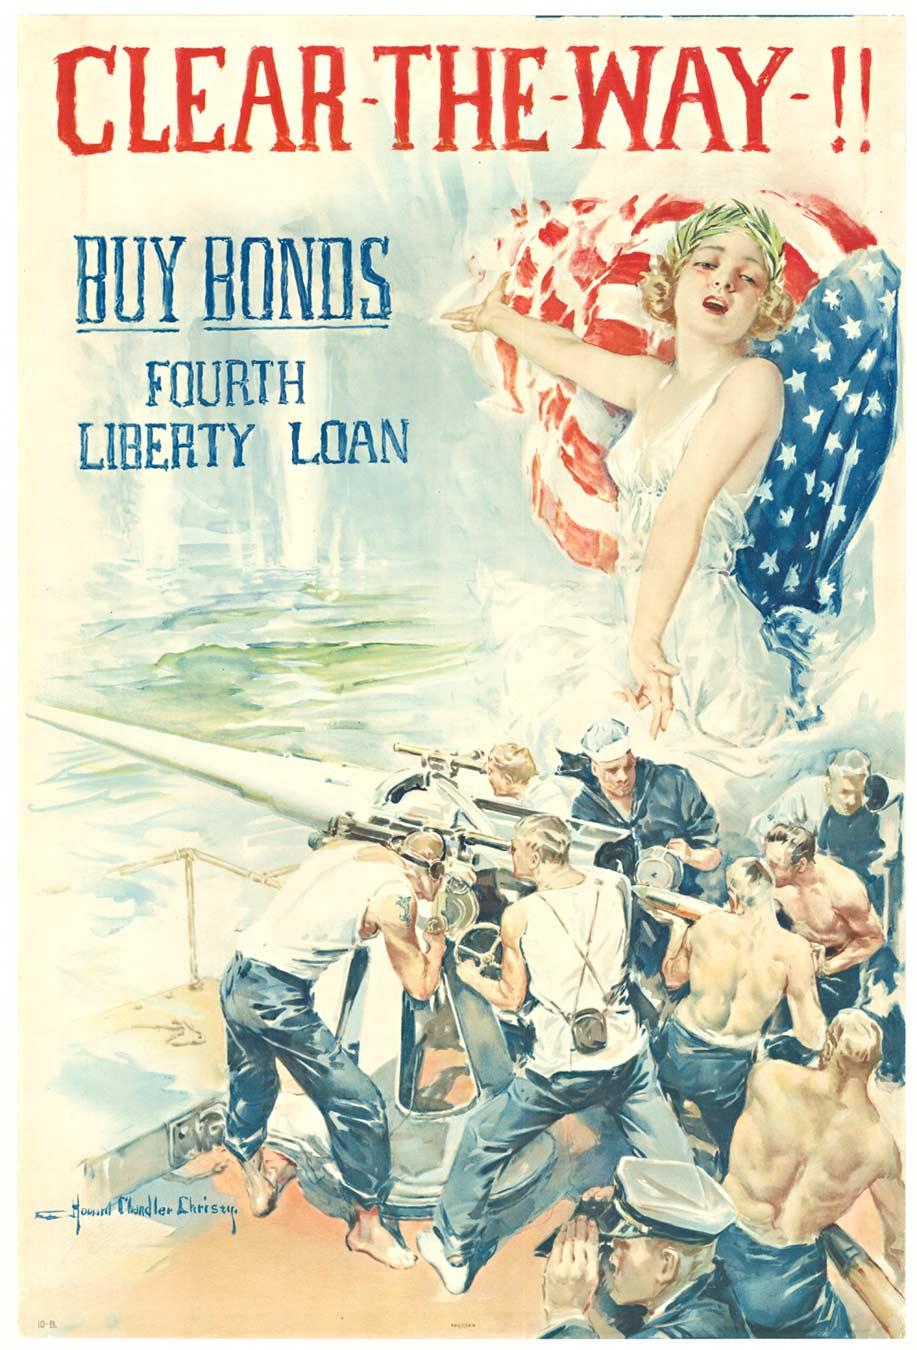 Howard Chandler Christy Landscape Print - Original "Clear the Way!! Buy Bonds Fourth Liberty Loan, vintage poster, 1917